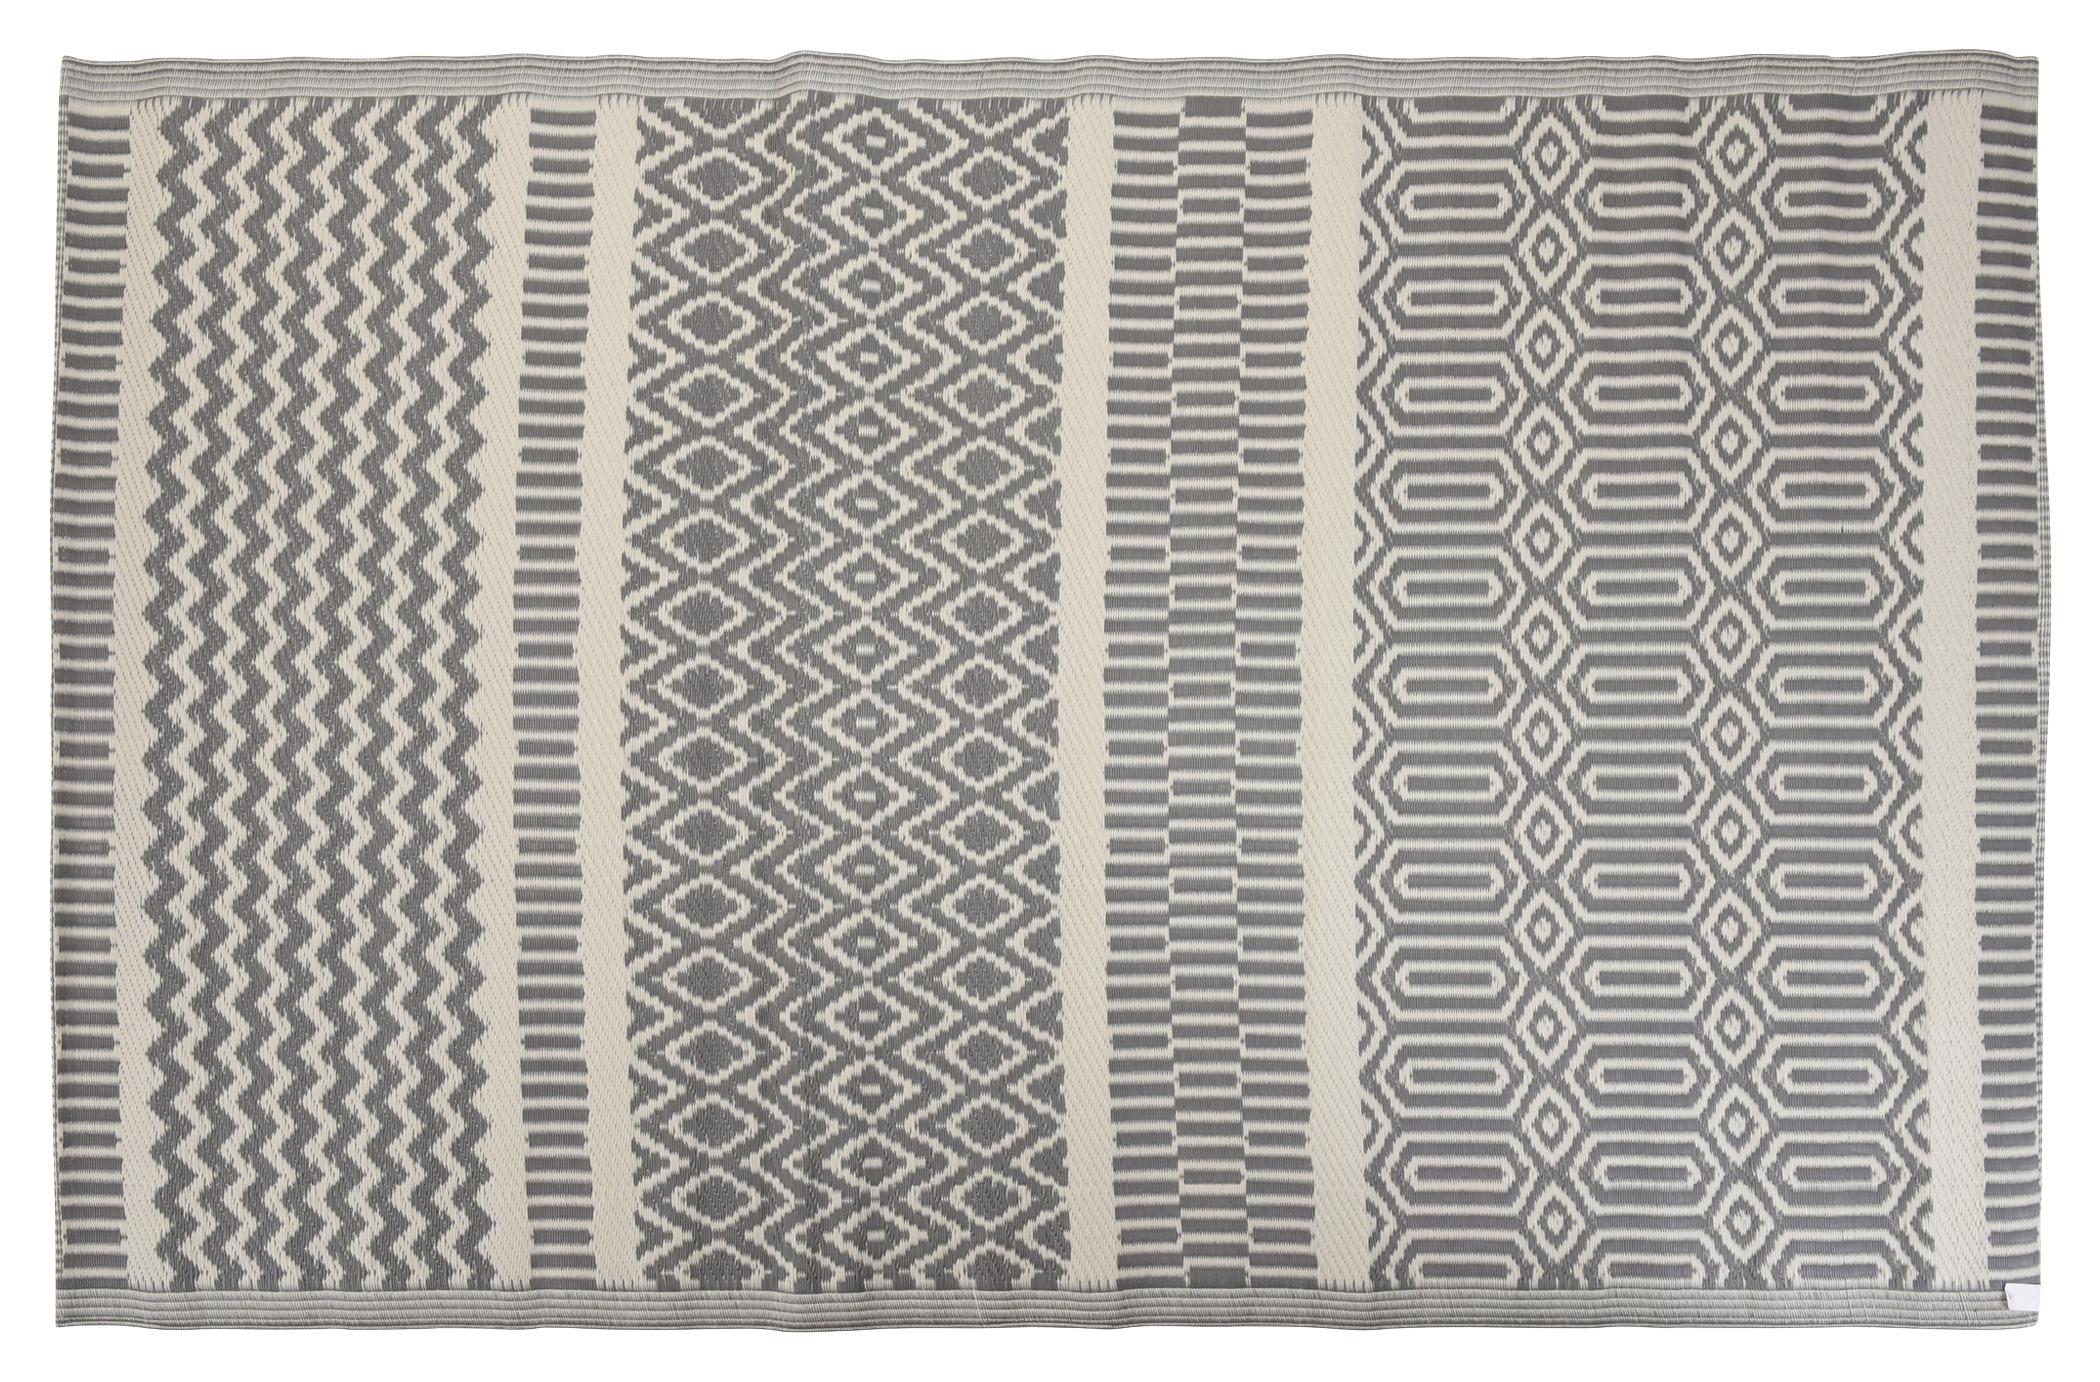 Outdoor-Teppich Grau/Beige Abstrakt 120x180 cm - Beige/Grau, Basics, Textil (120/180cm)